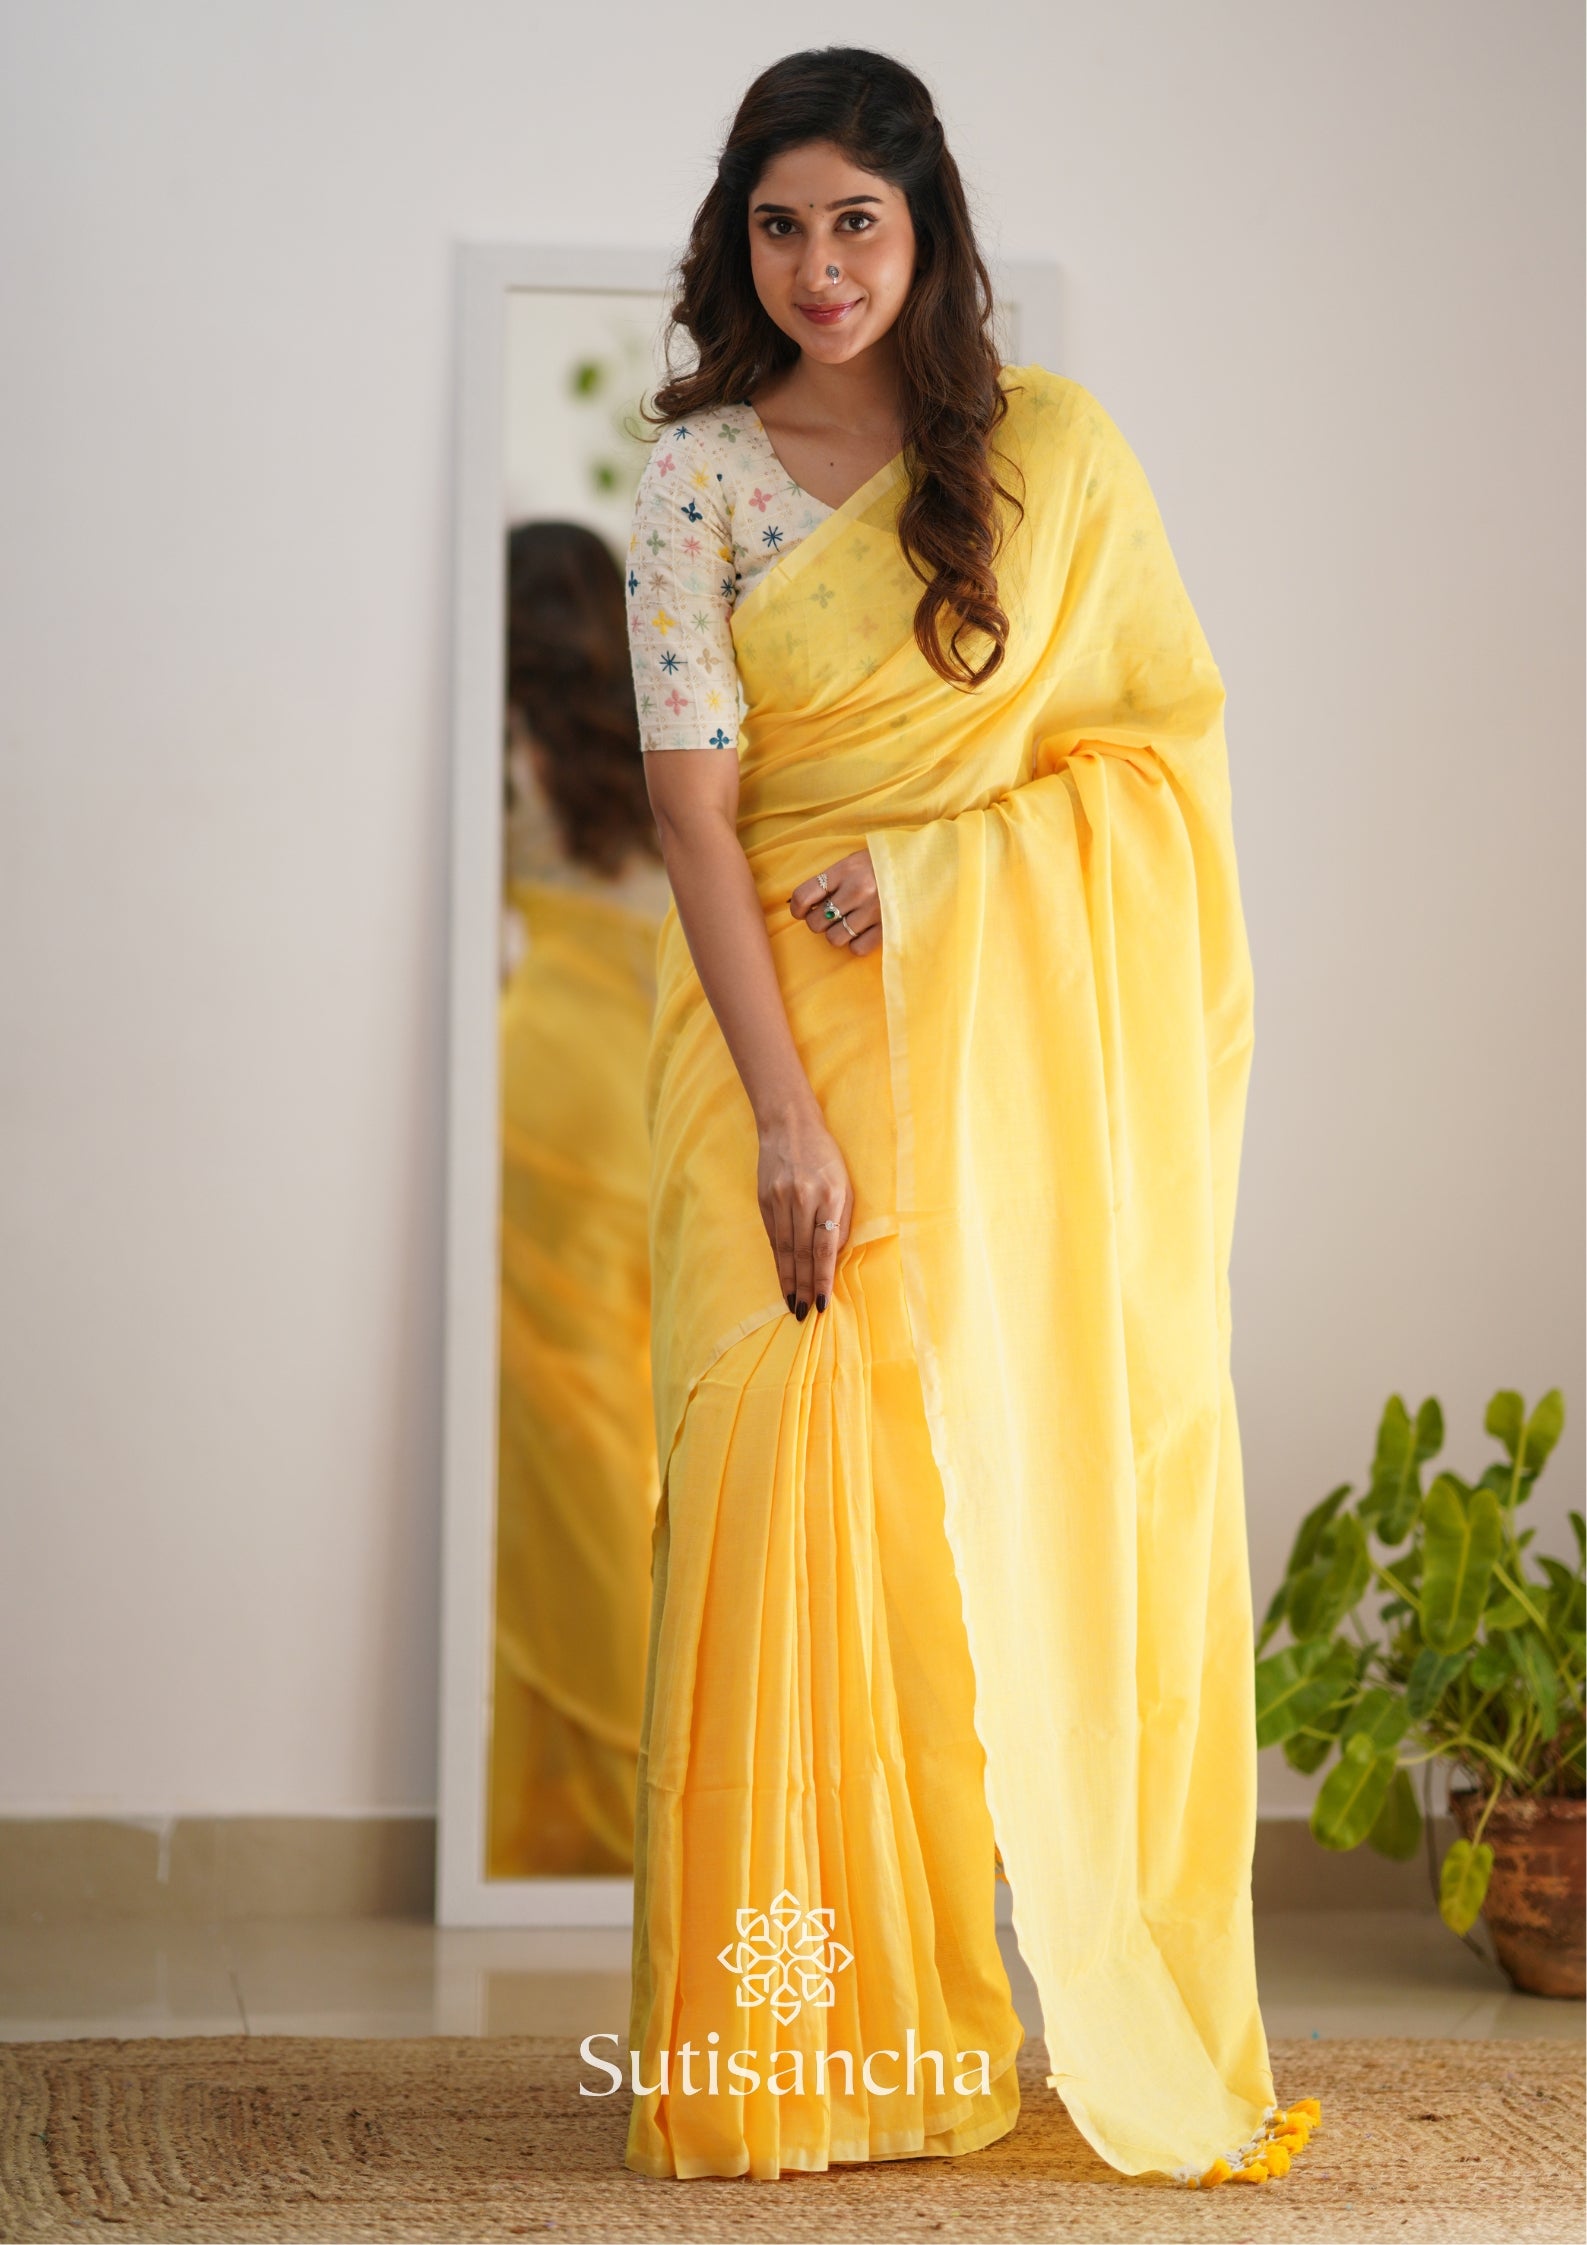 Sutisancha Yellow Khadi Saree with designer Blouse